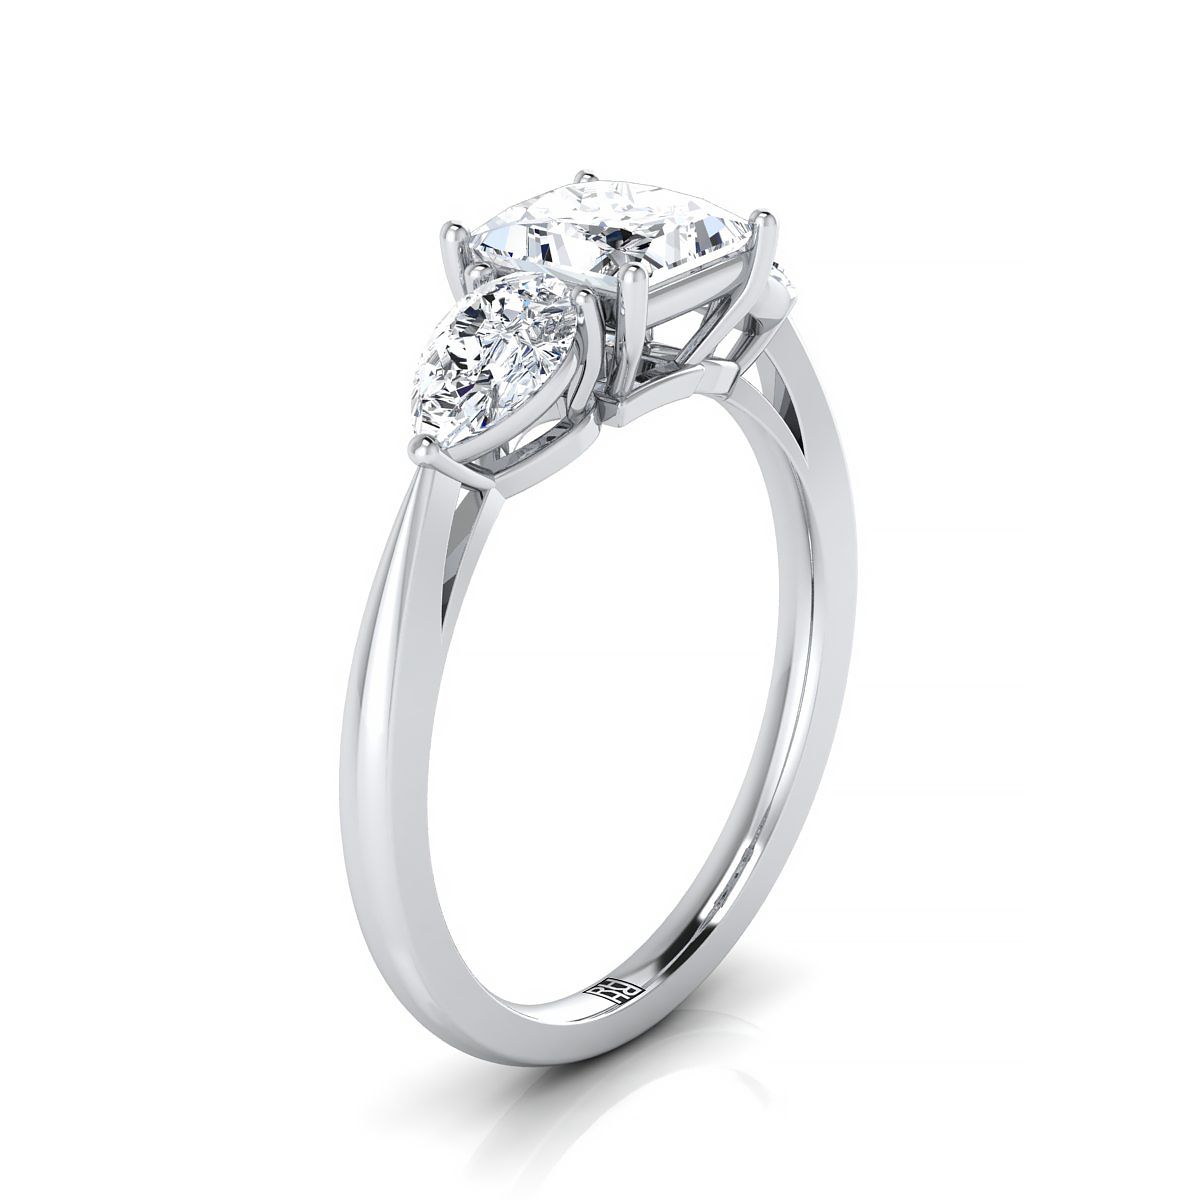 18K White Gold Princess Cut Diamond Perfectly Matched Pear Shaped Three Diamond Engagement Ring -7/8ctw